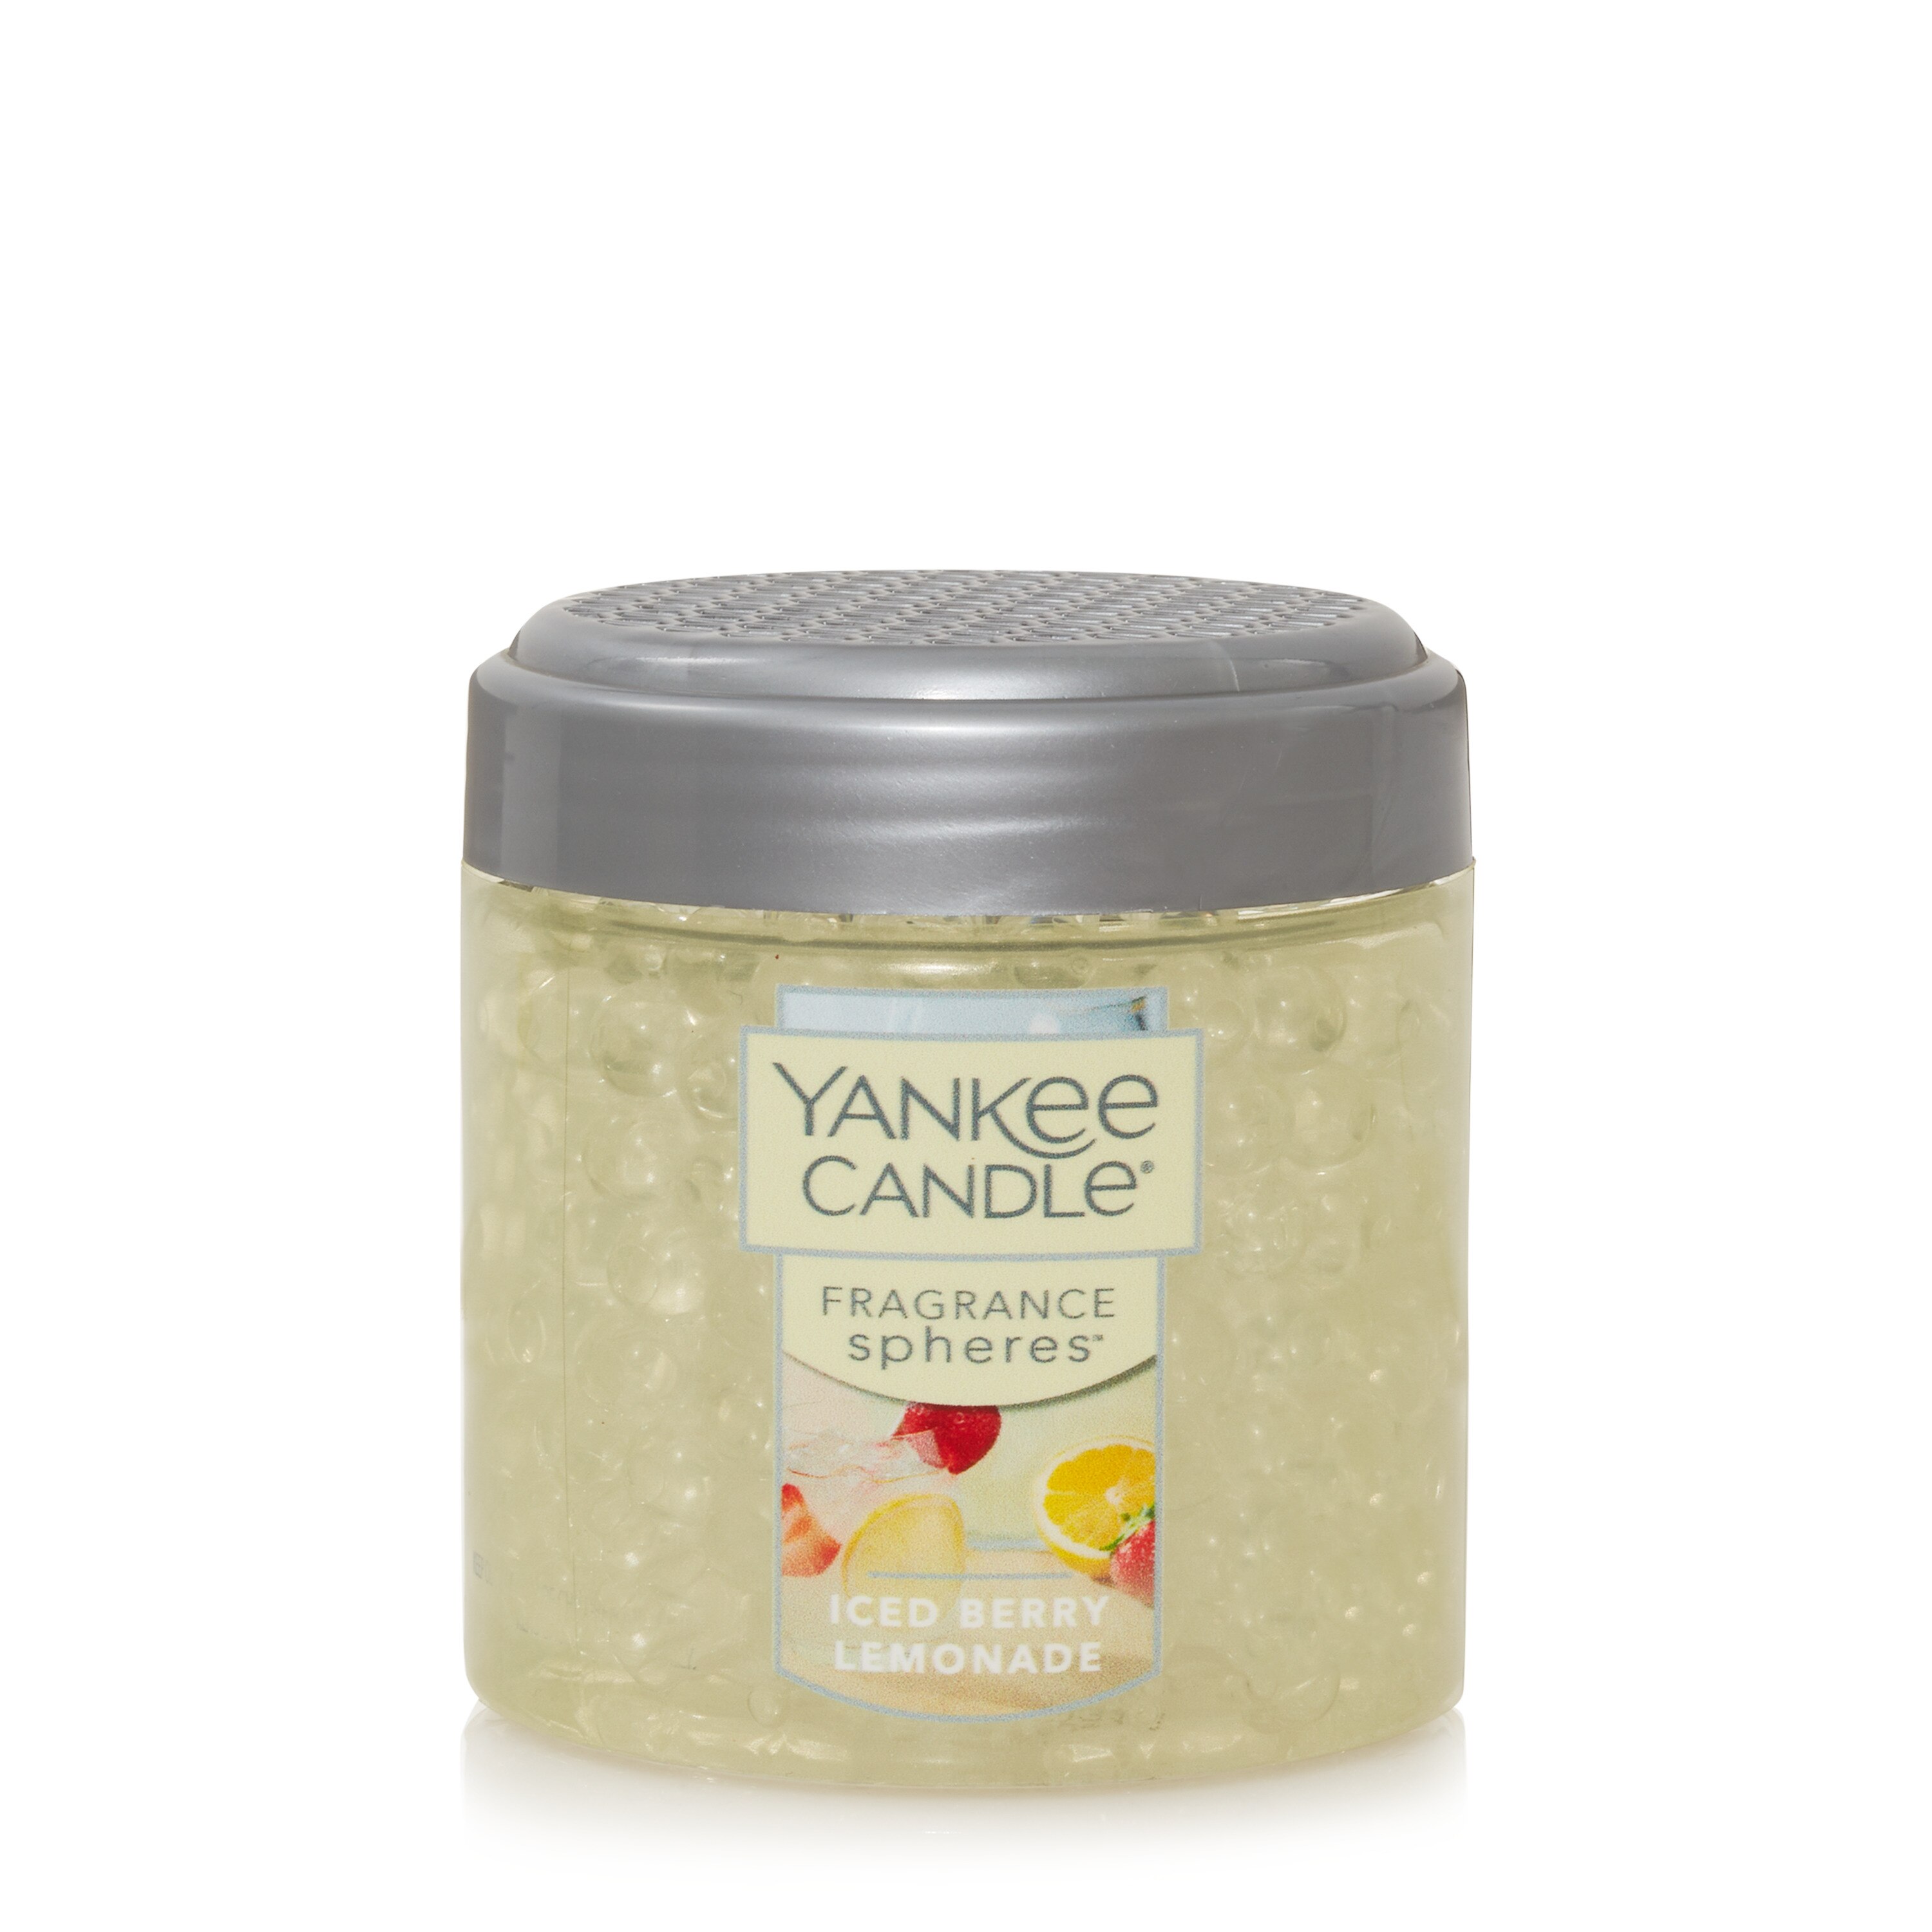 Yankee Candle Iced Berry Lemonade Fragrance Spheres - 6 Oz , CVS